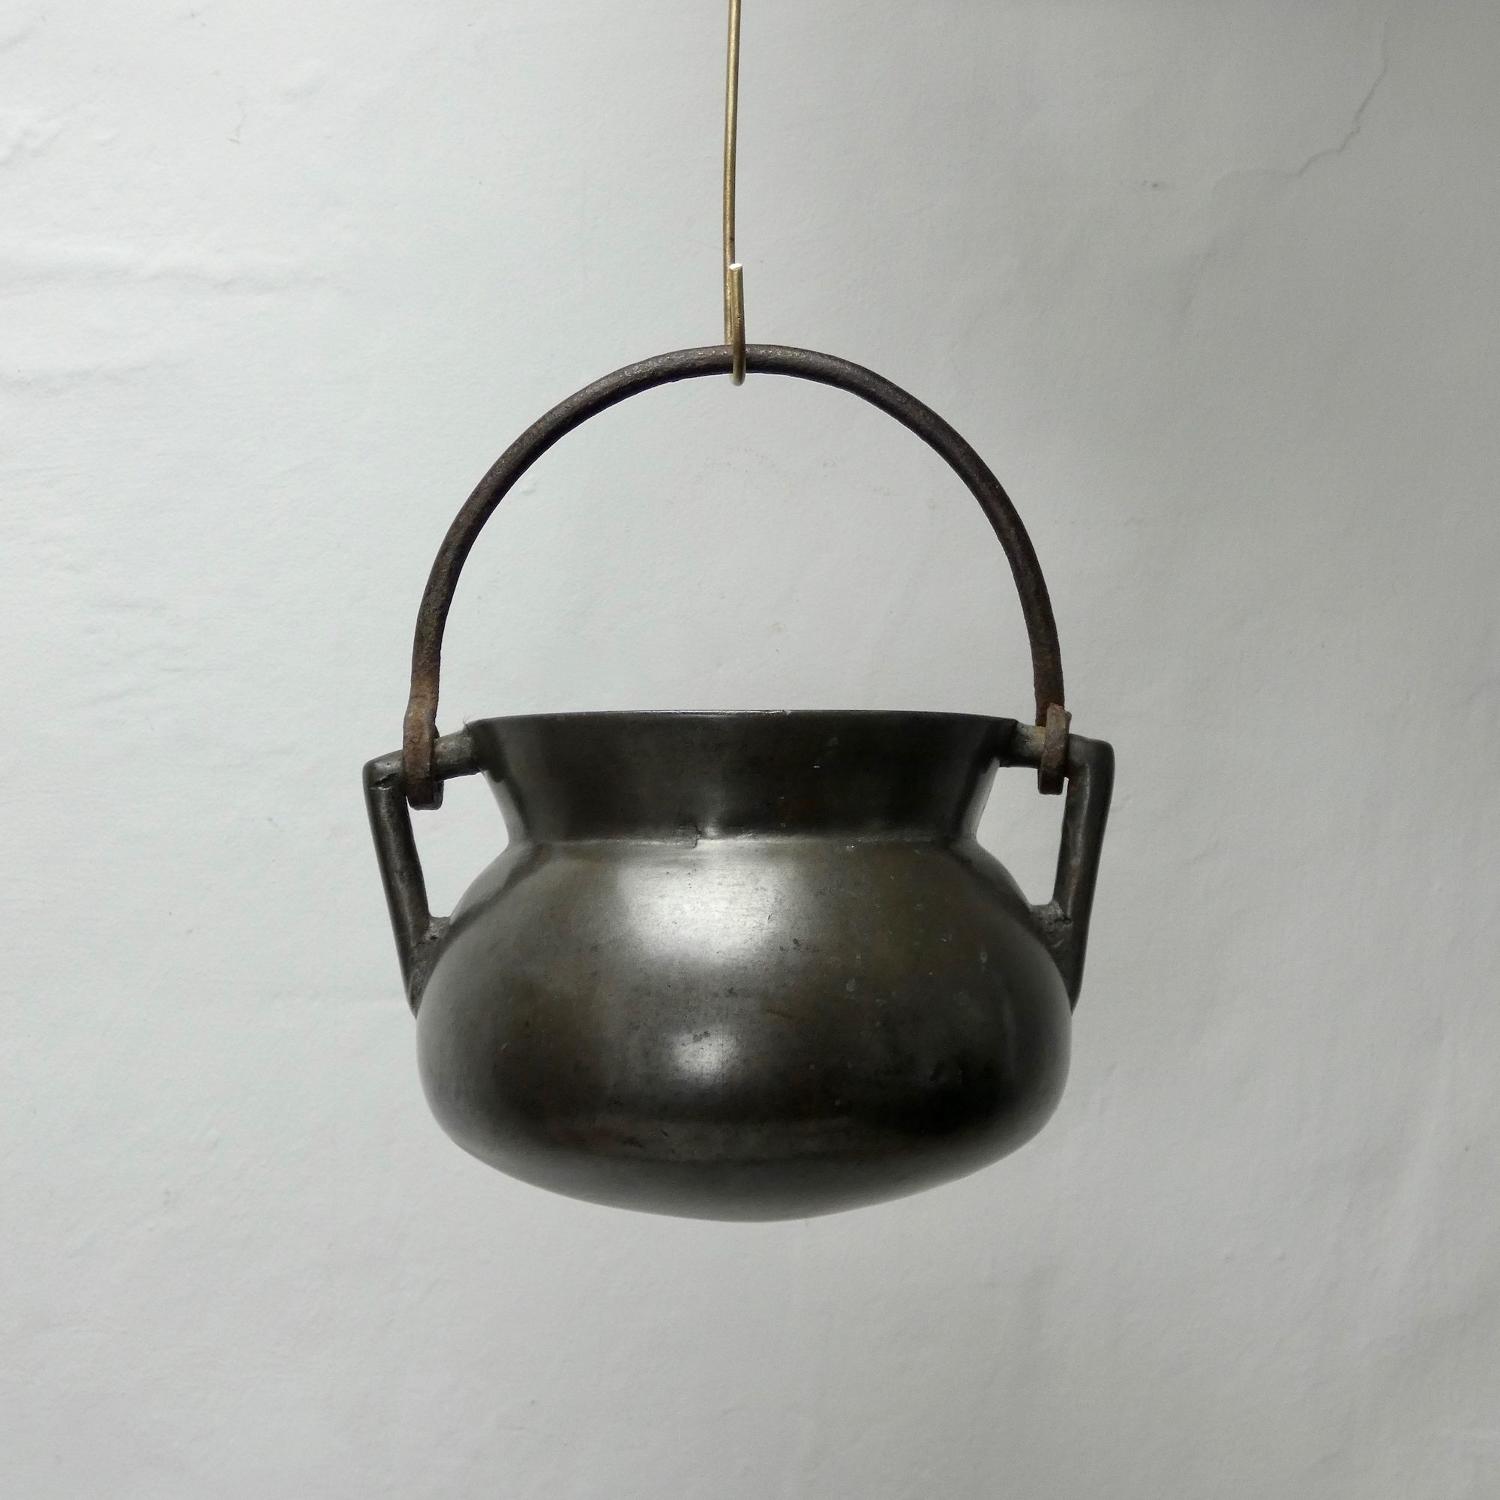 17th century bronze cooking pot